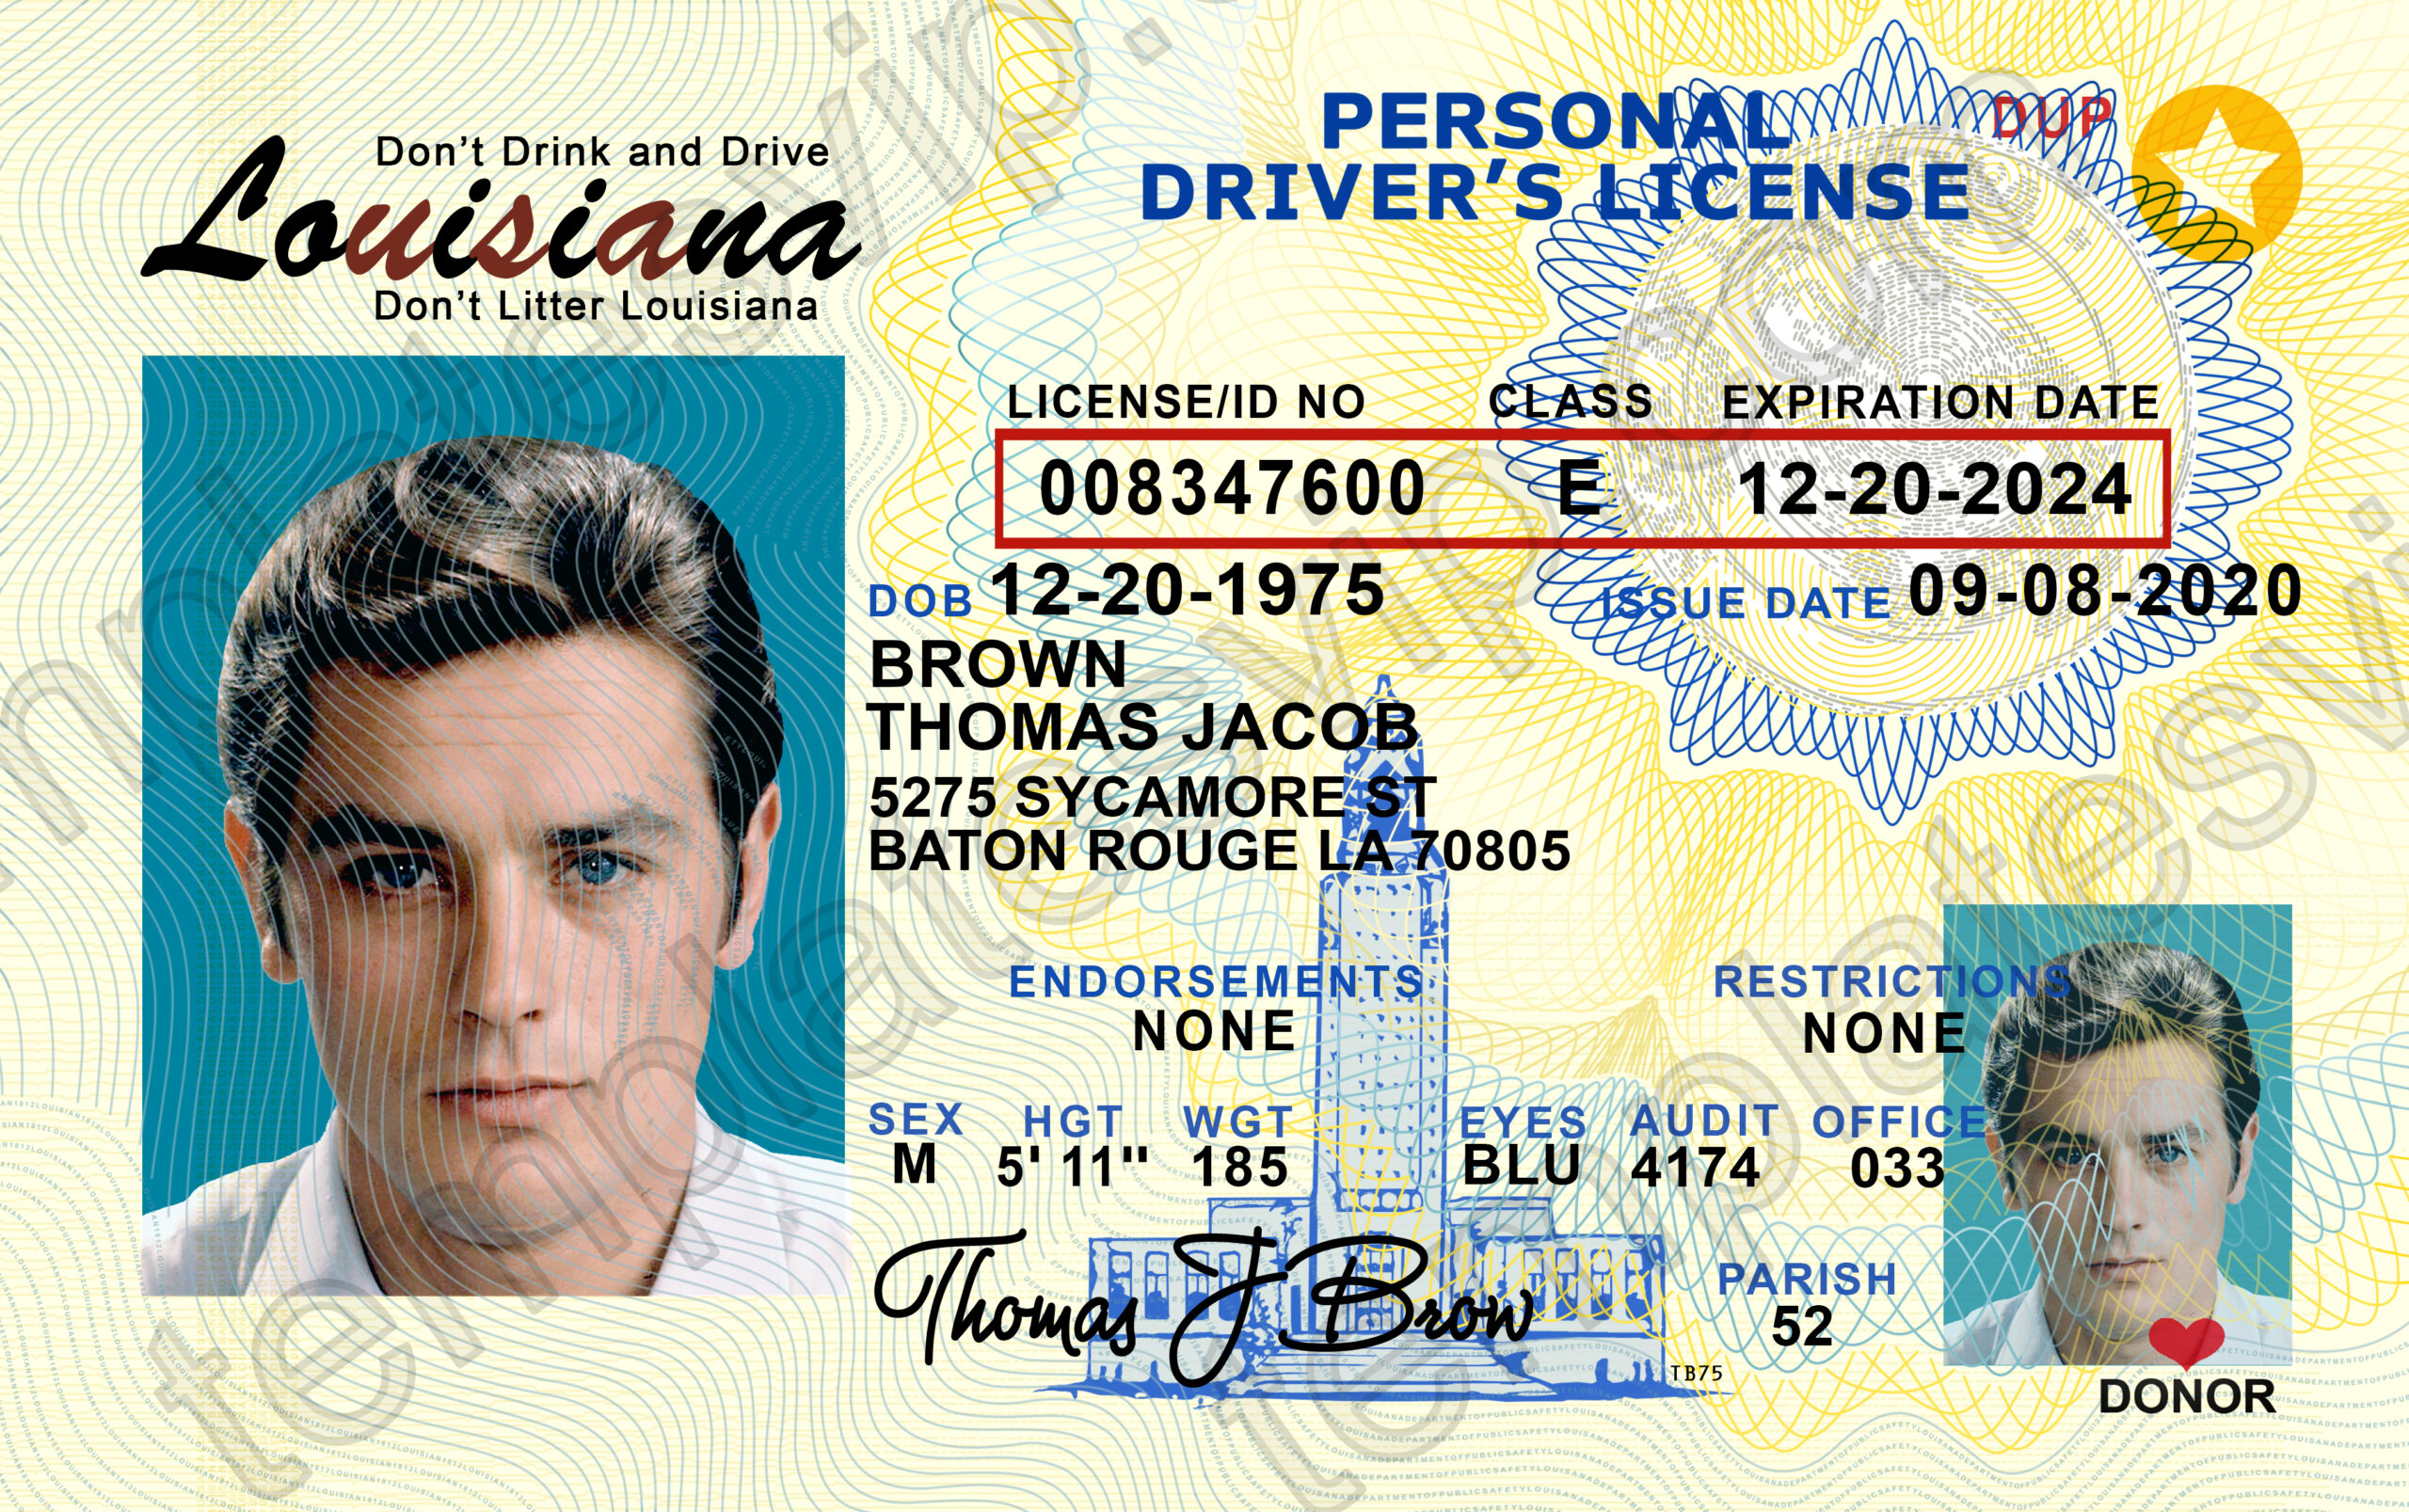 Ca People License Theme